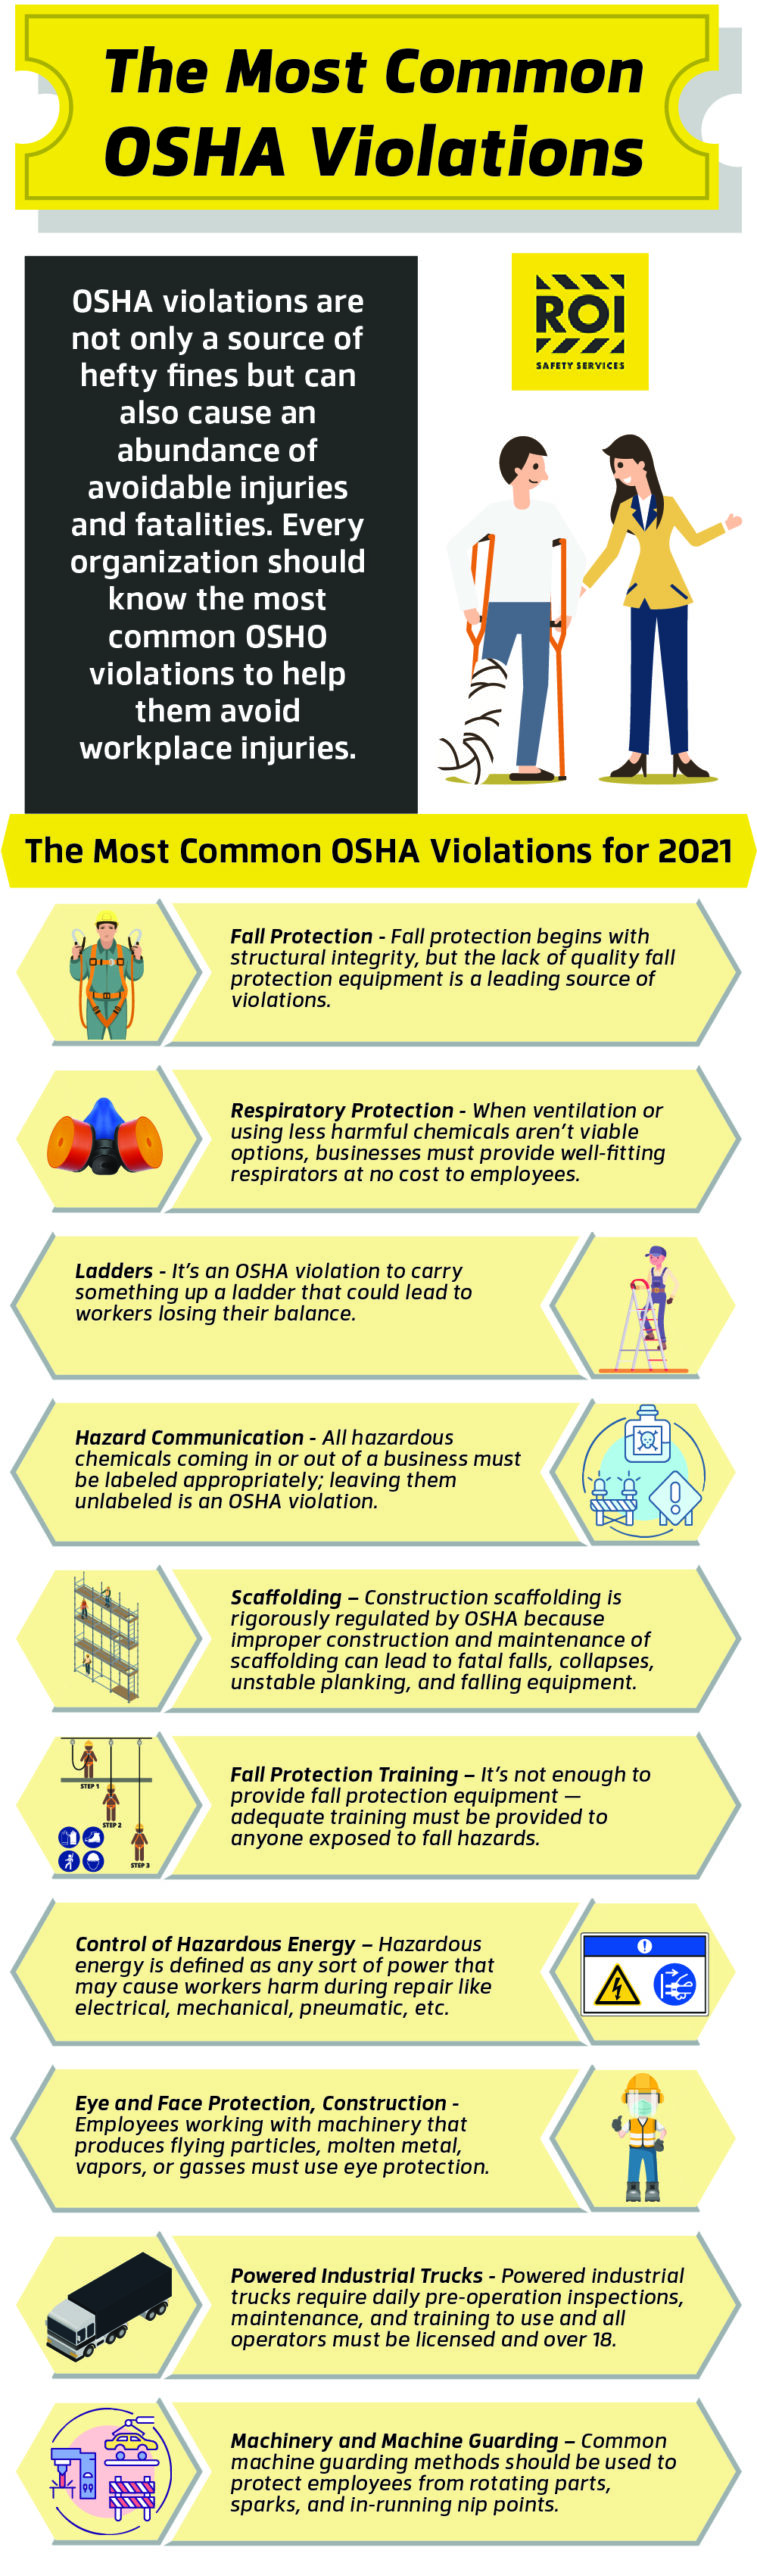 The Most Common OSHA Violations